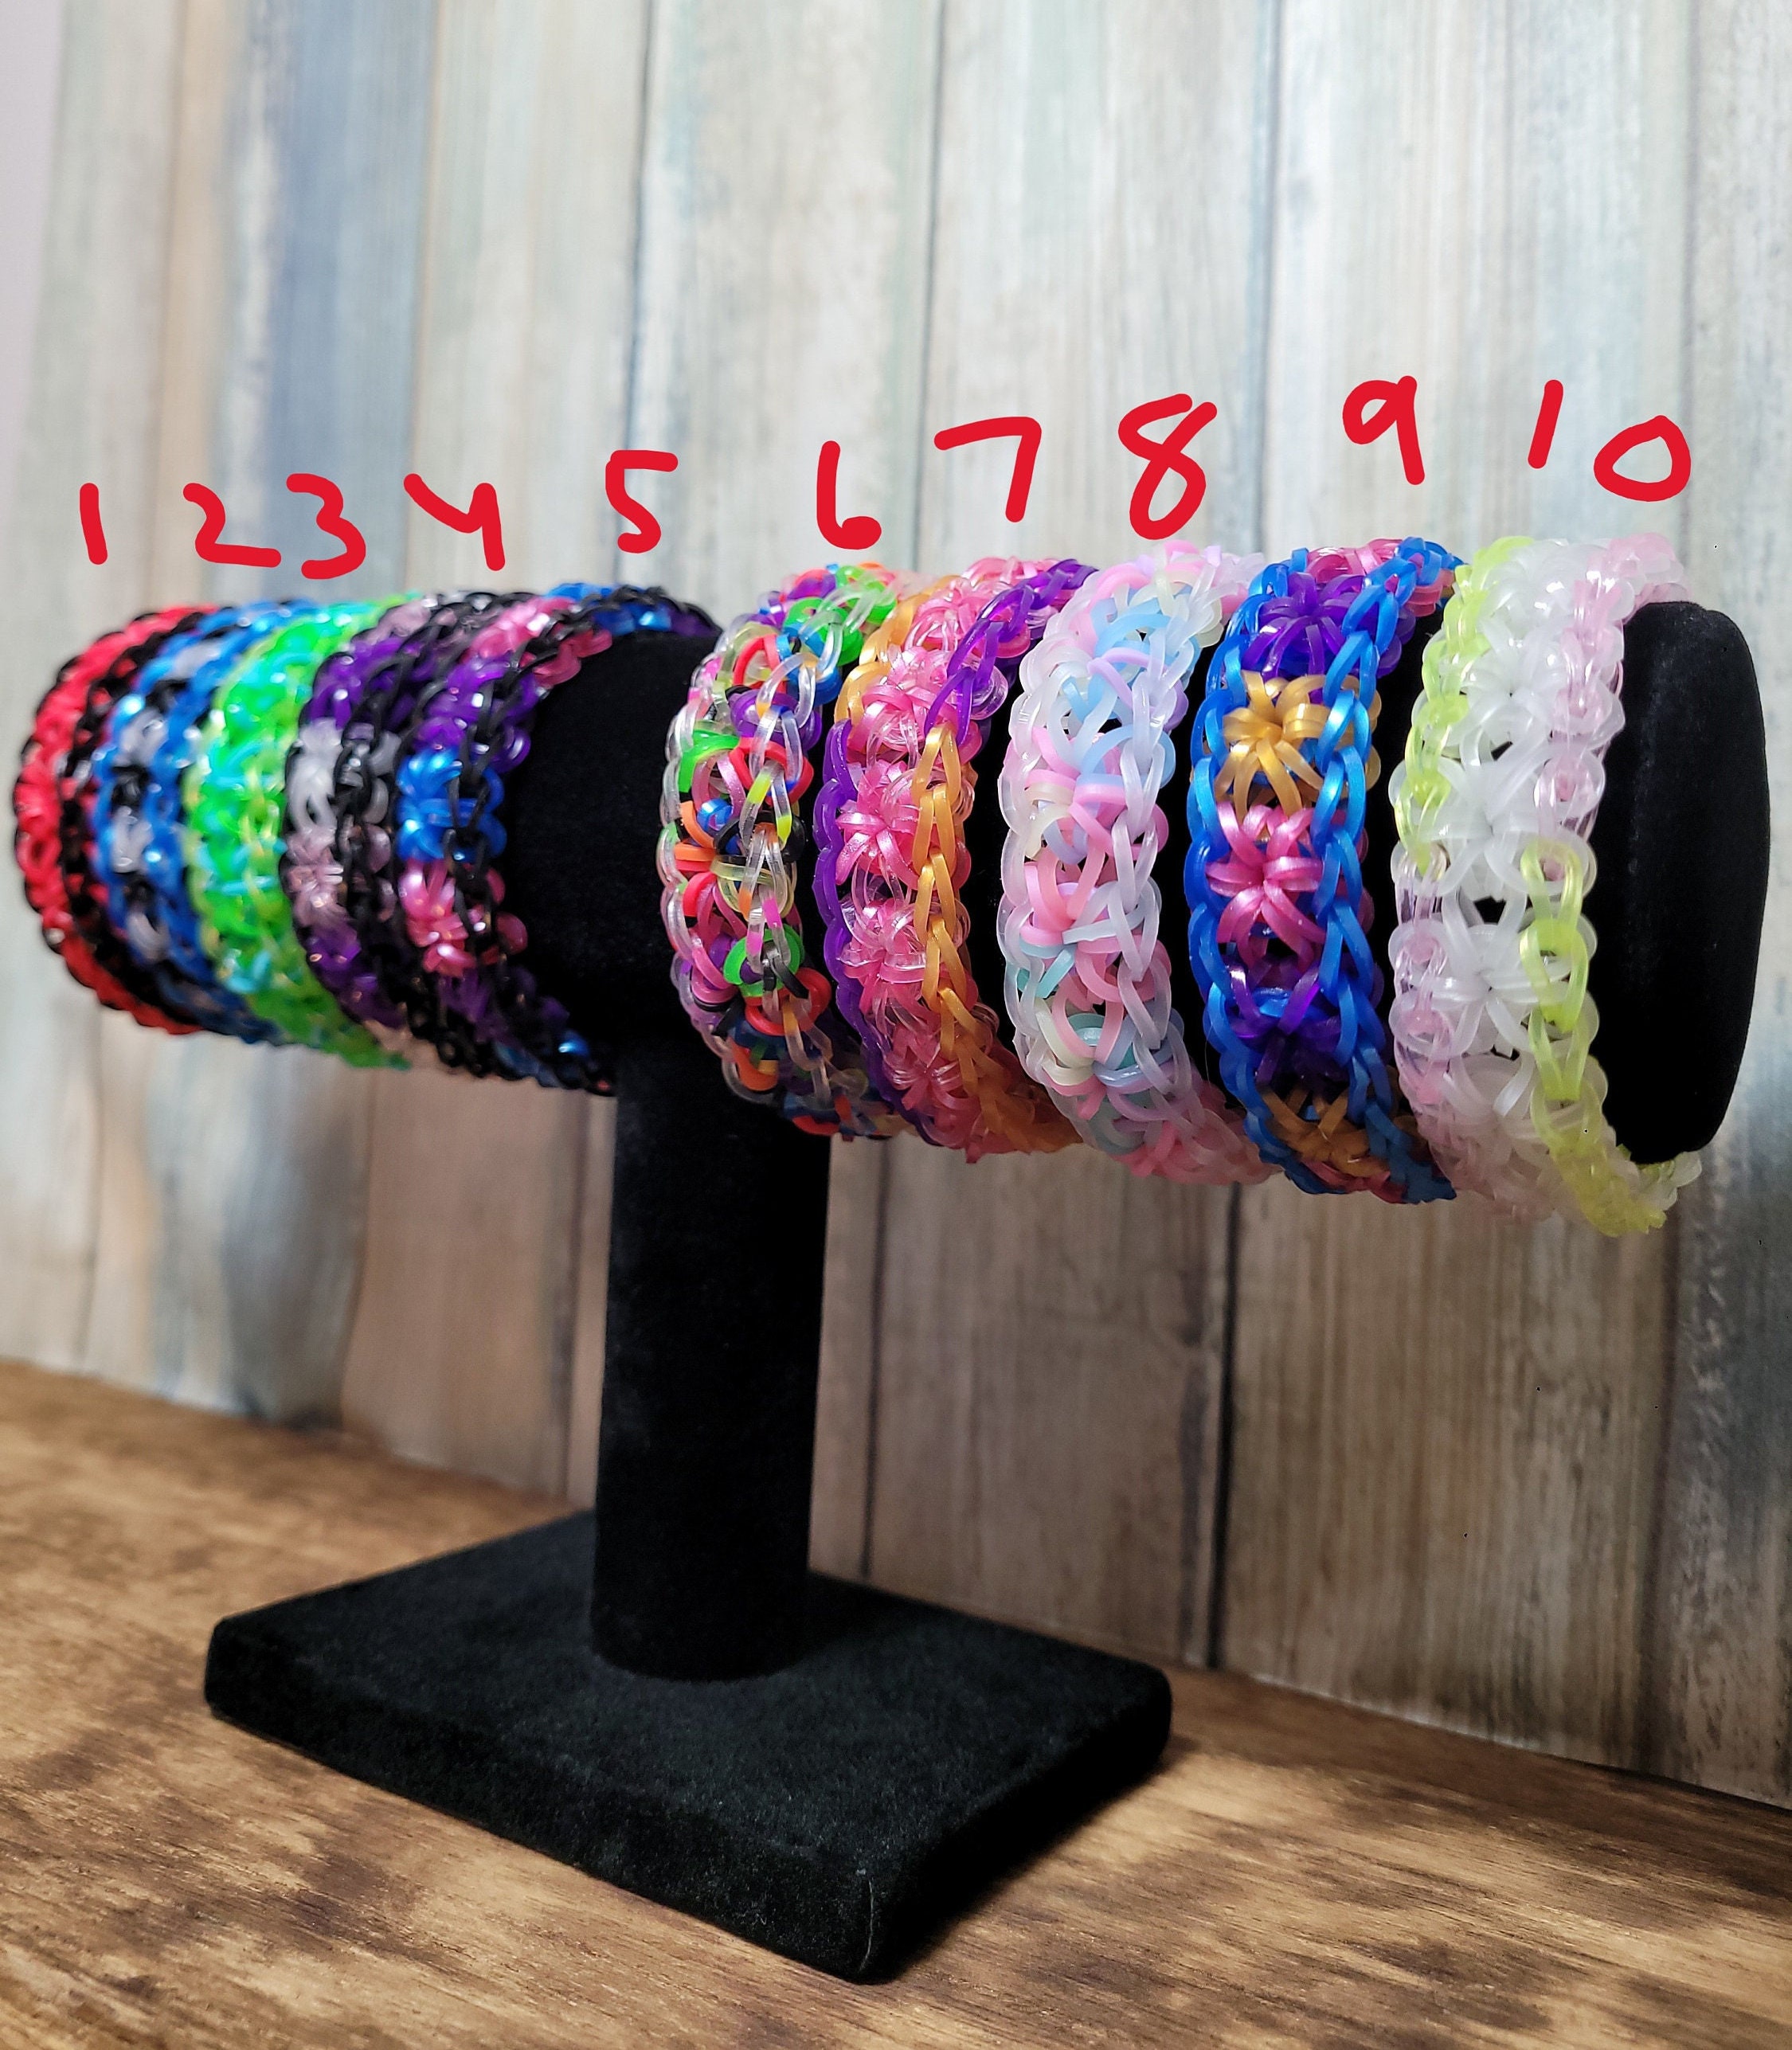 7 Fun Rainbow Loom Bracelets to Make ...